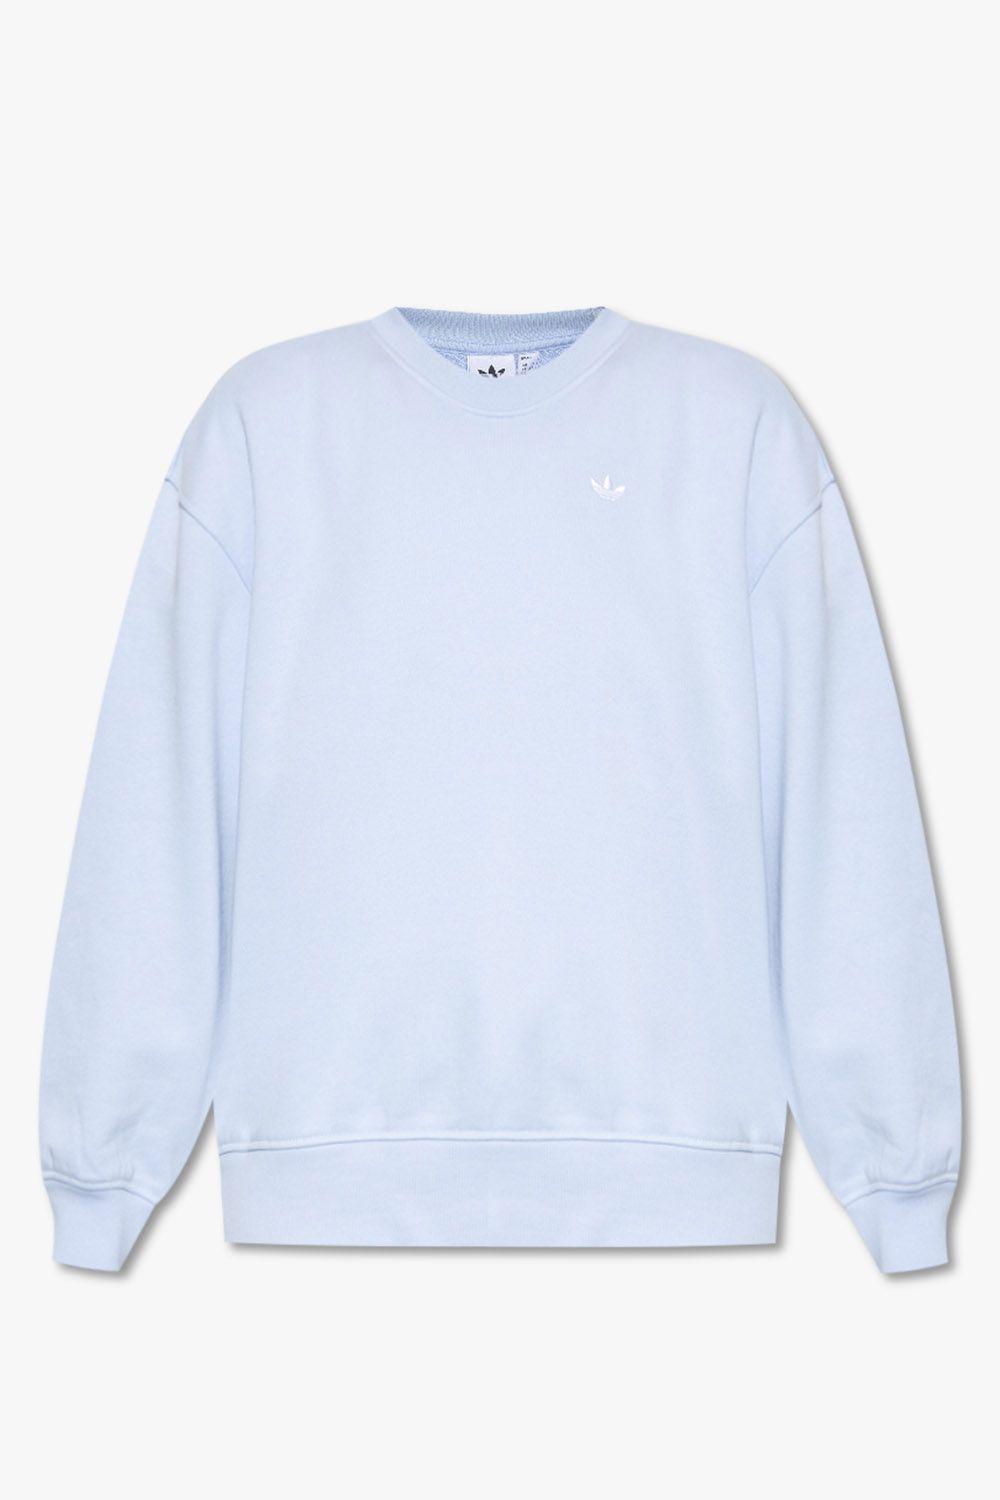 adidas Originals Sweatshirt With Logo in Blue | Lyst